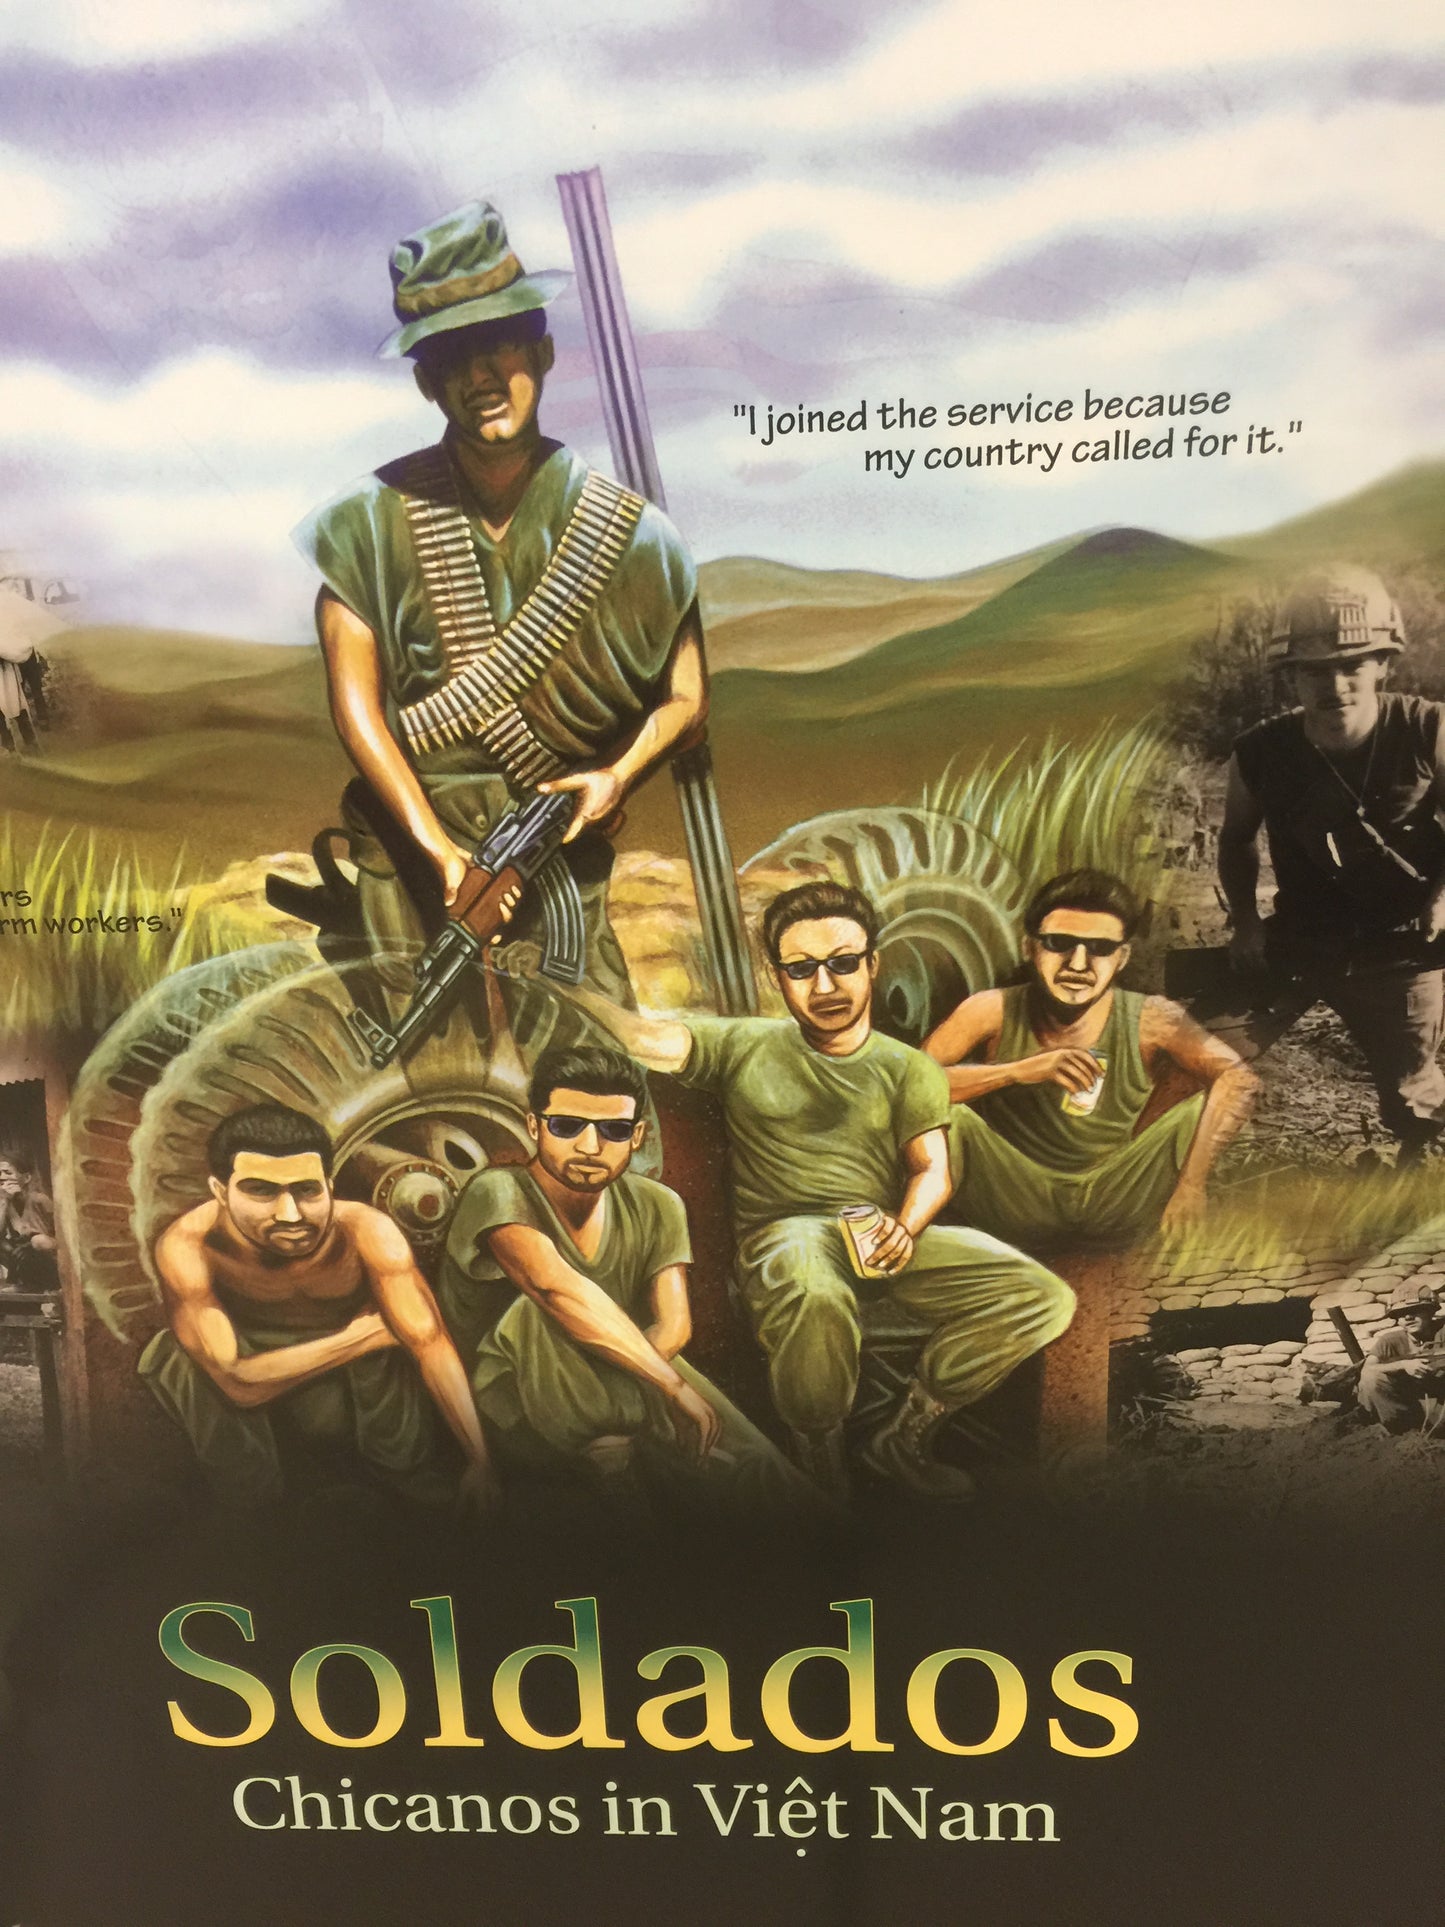 Poster "Soldados Chicanos in Viet Nam" by Charley Trujillo